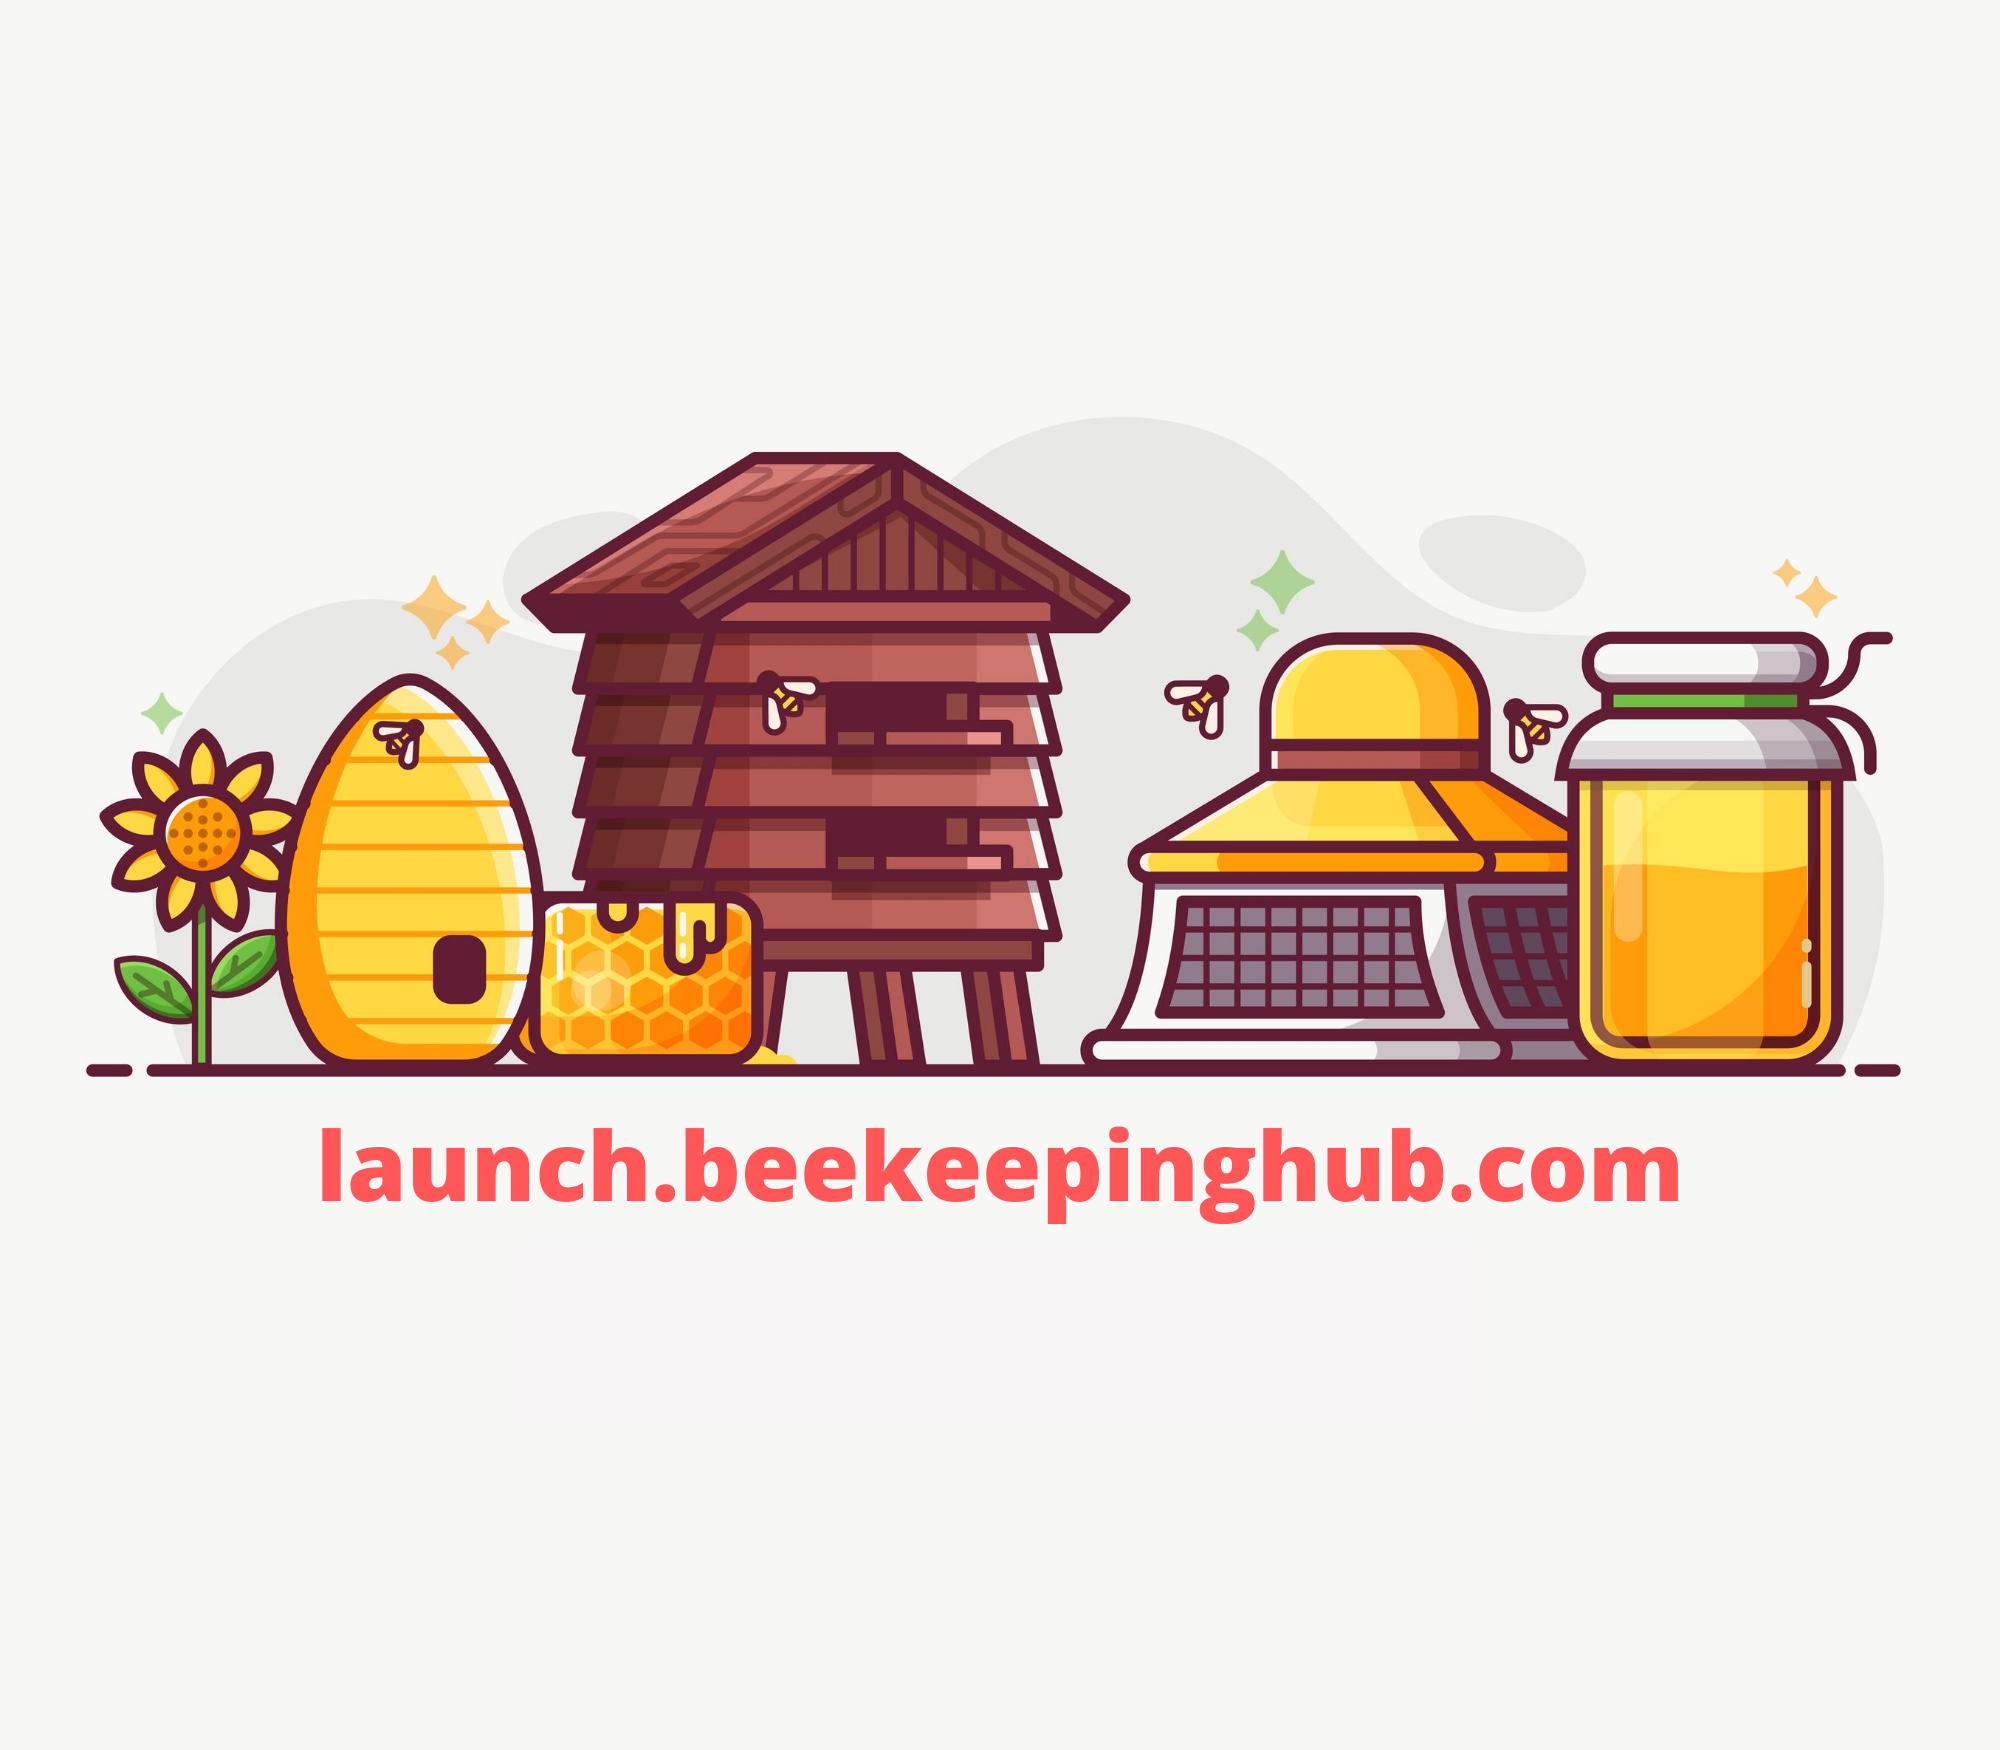 launch.beekeepinghub.com